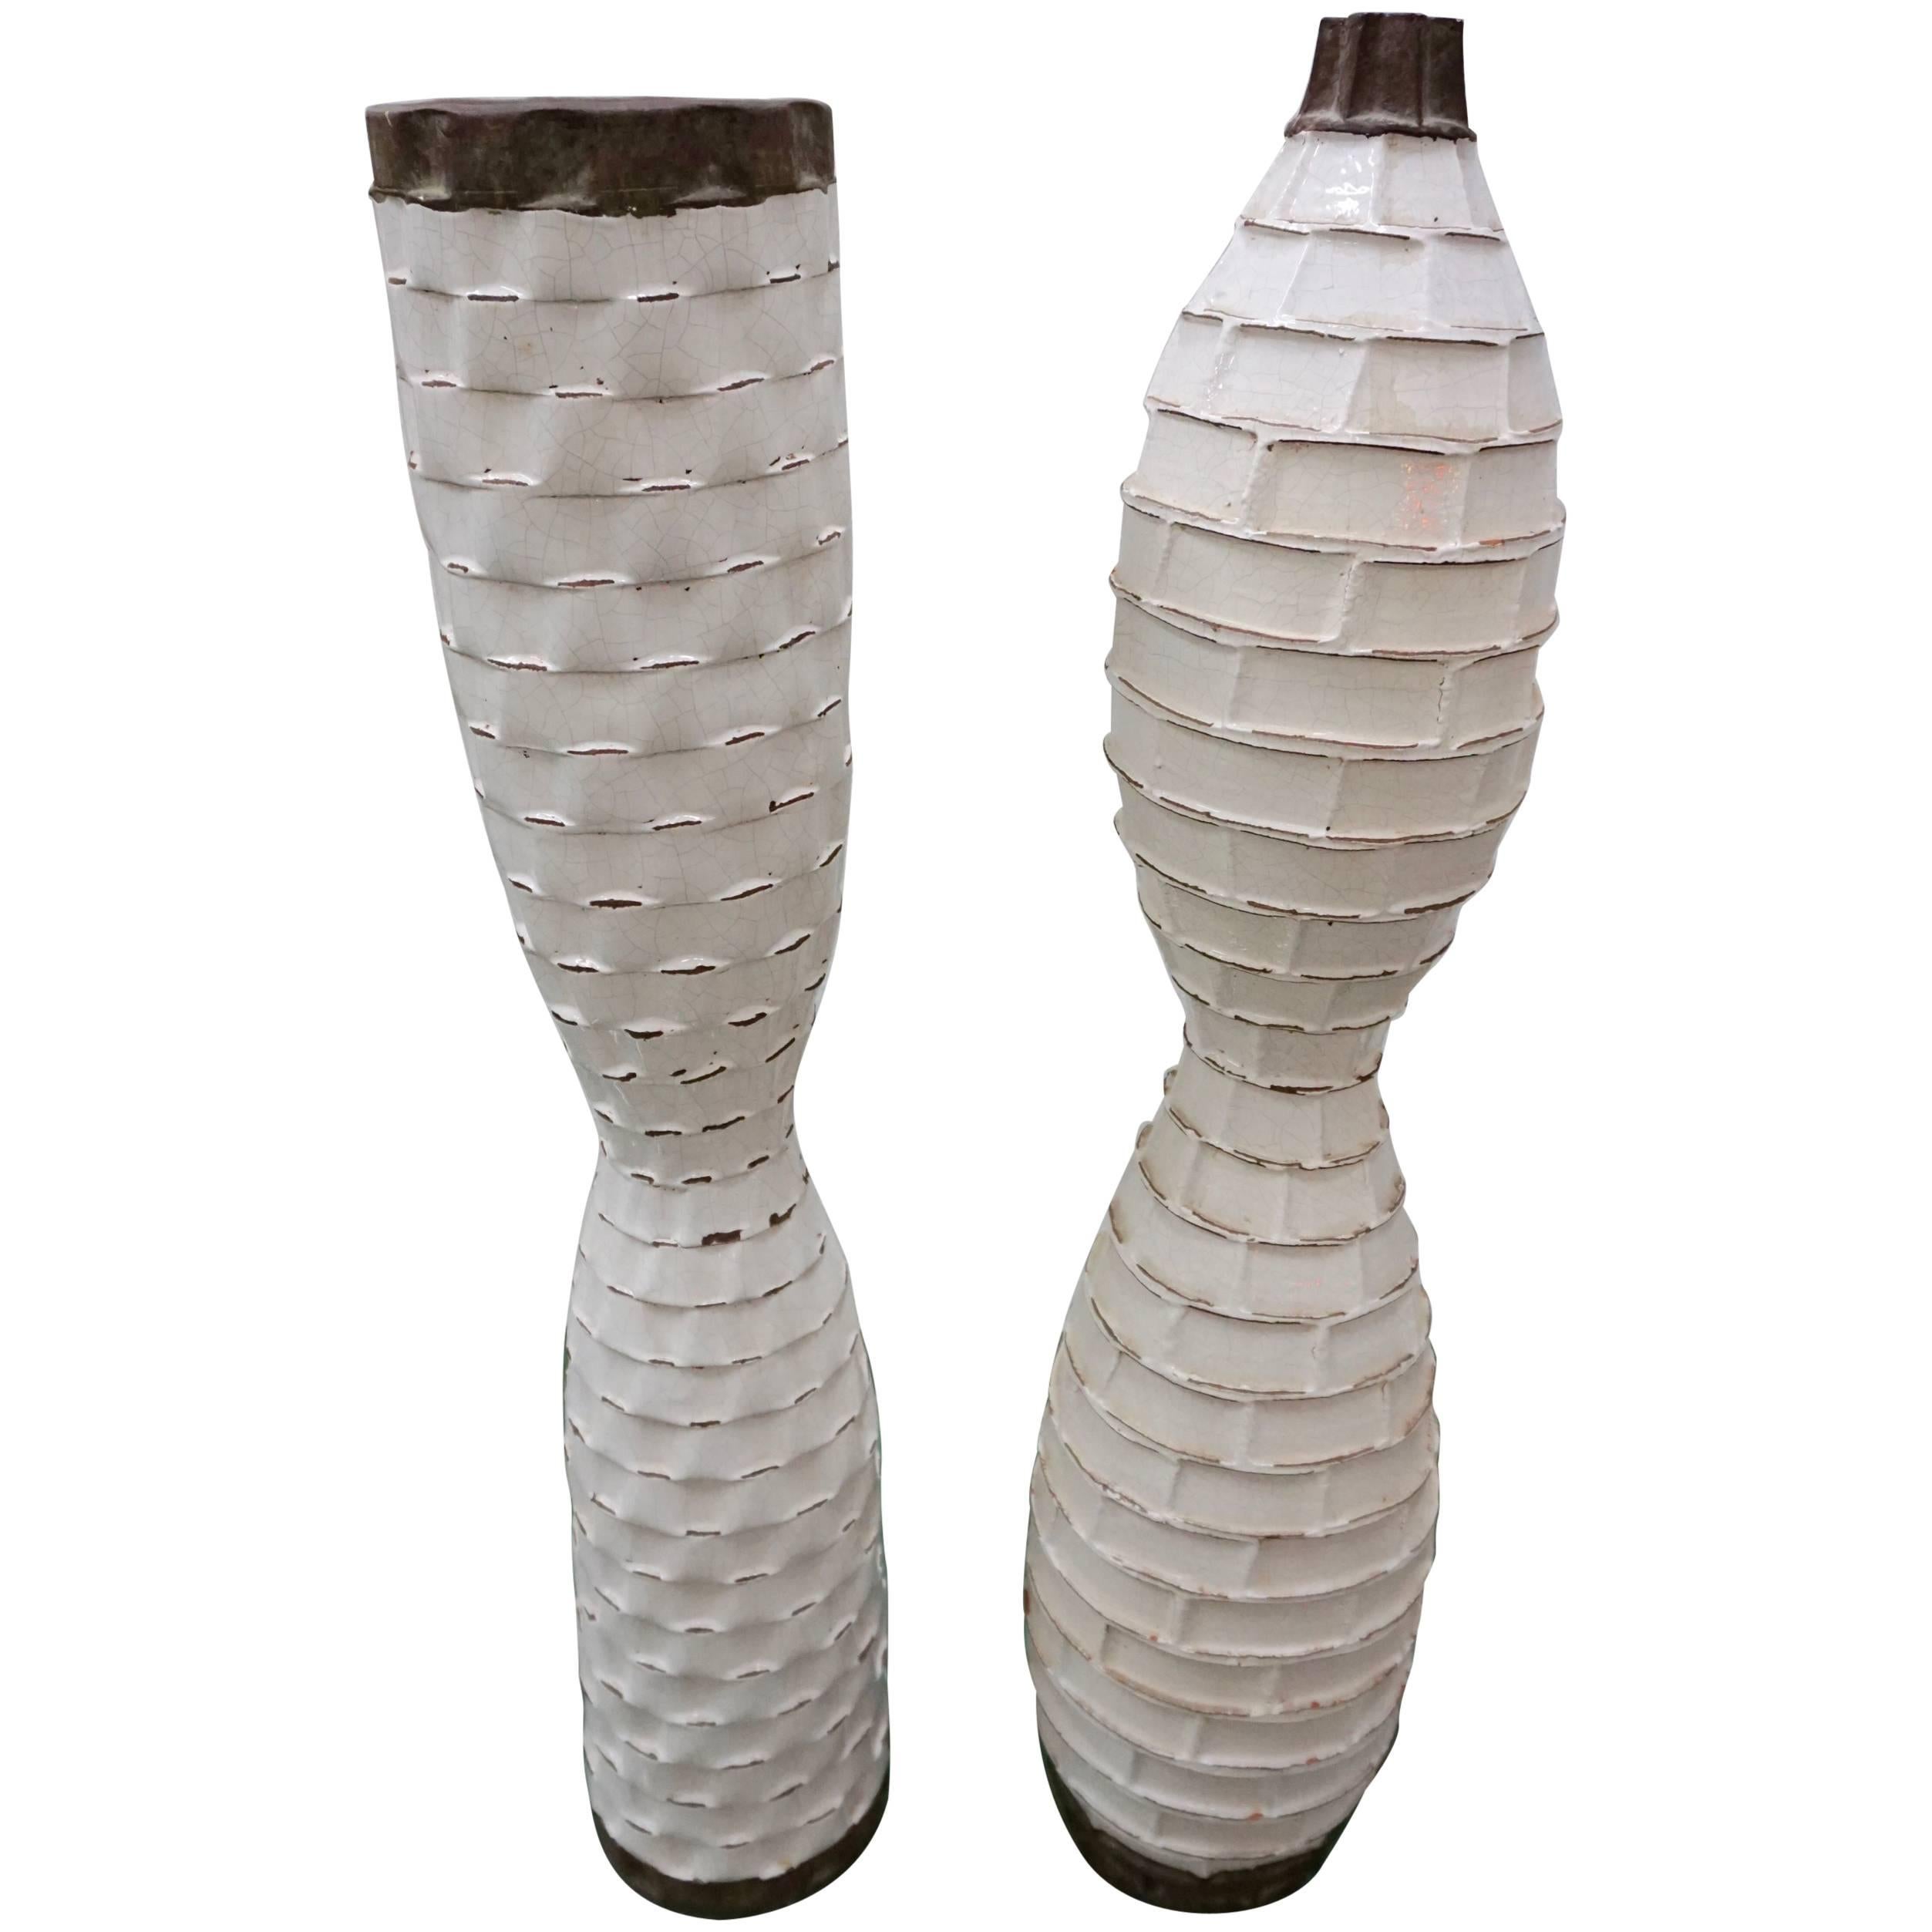 Pair of Glazed Ceramic Vessels